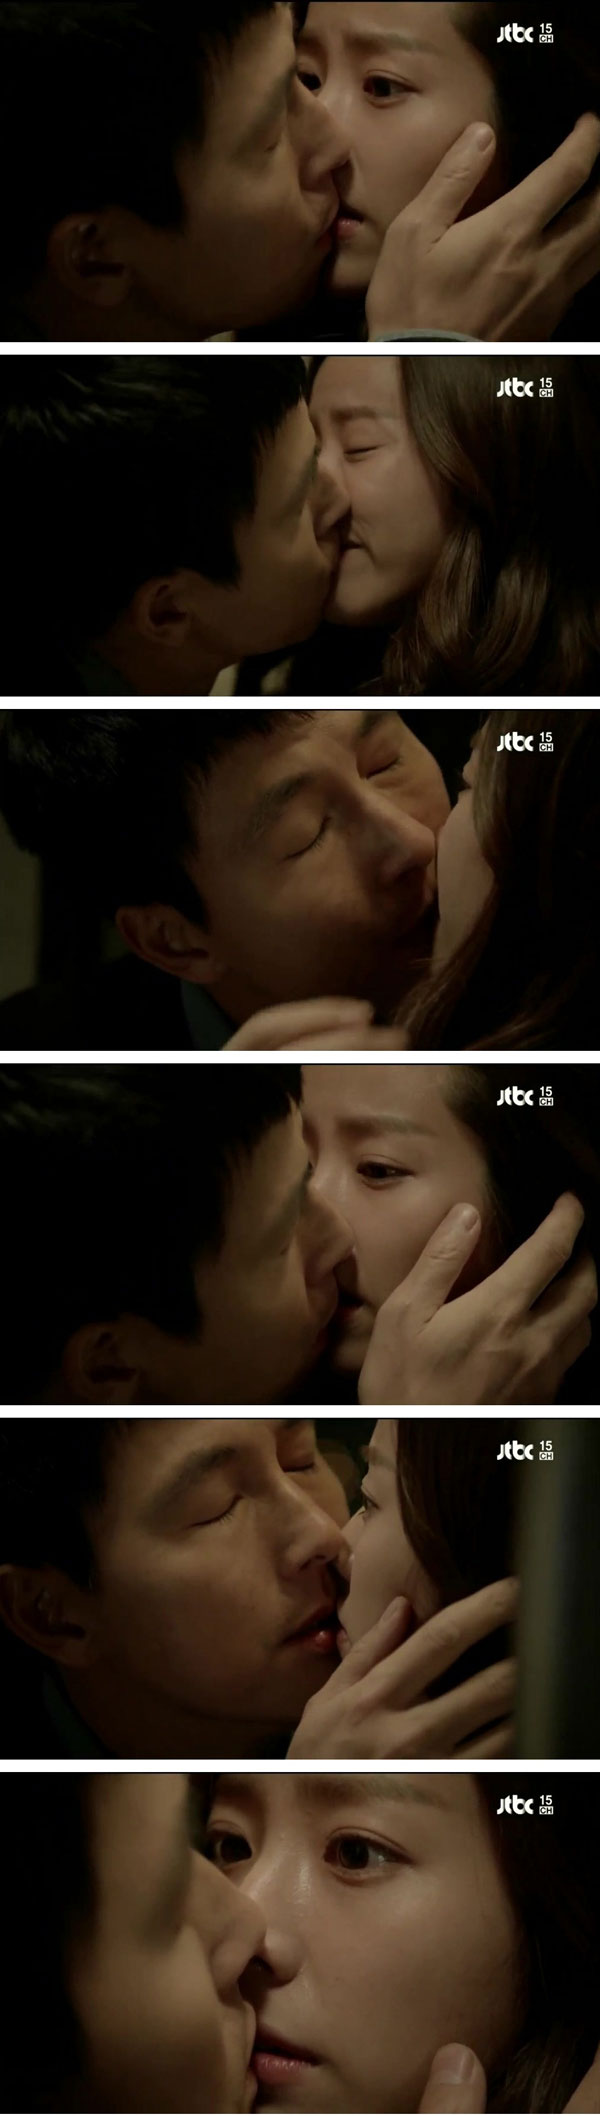 Jung Woo Sung and Han Ji Min Kiss